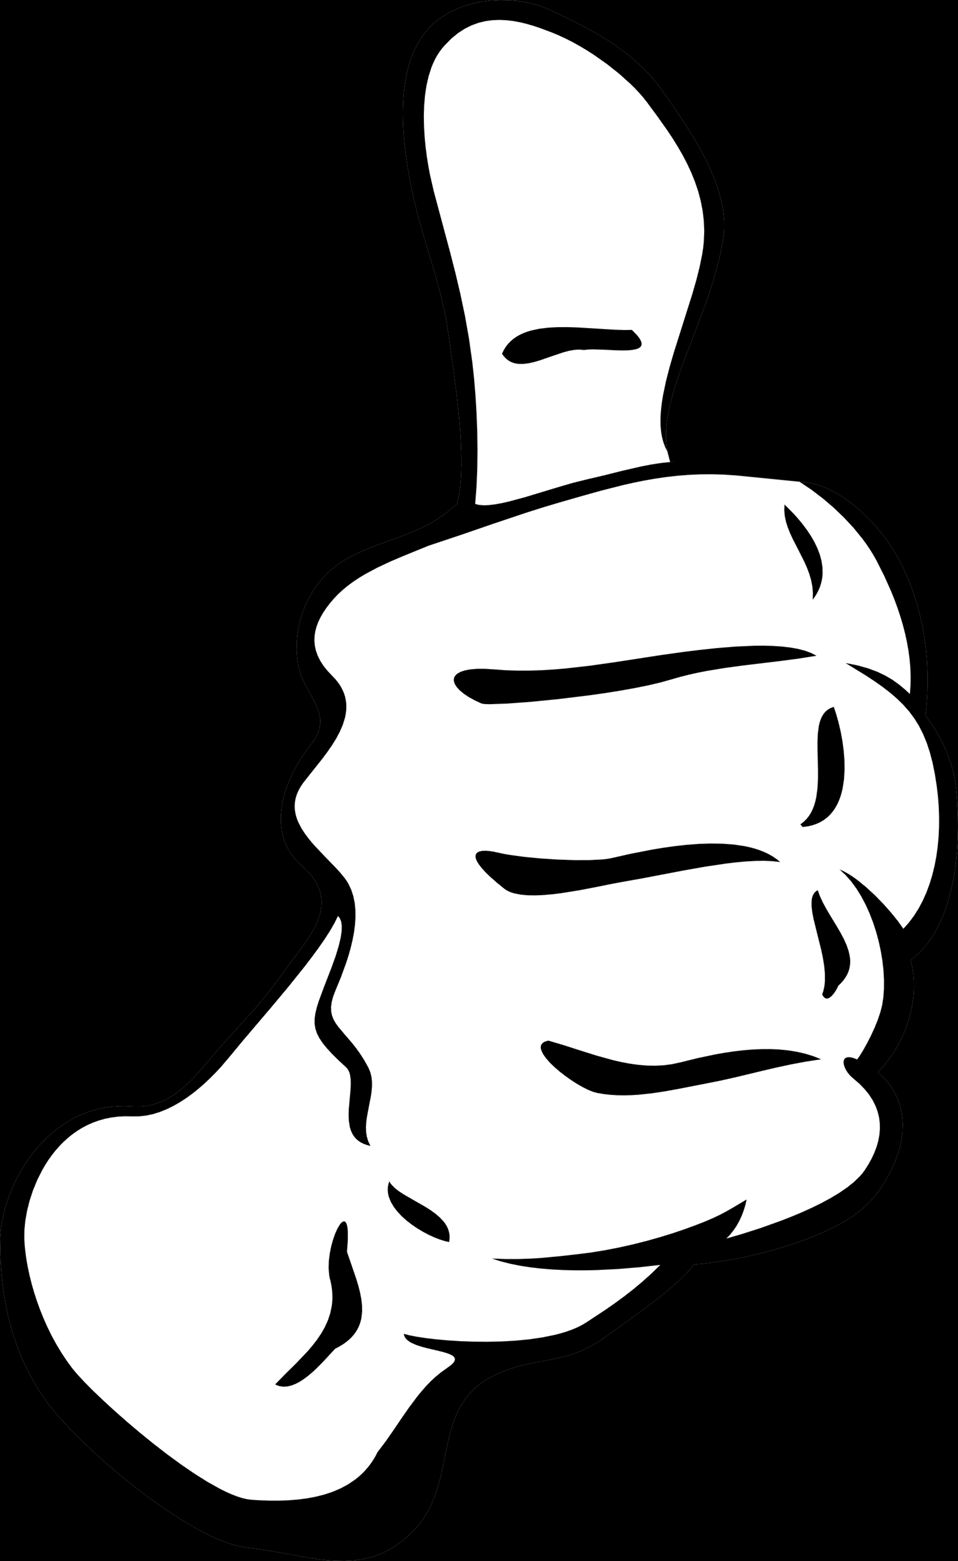 “Thumbs up” gesture